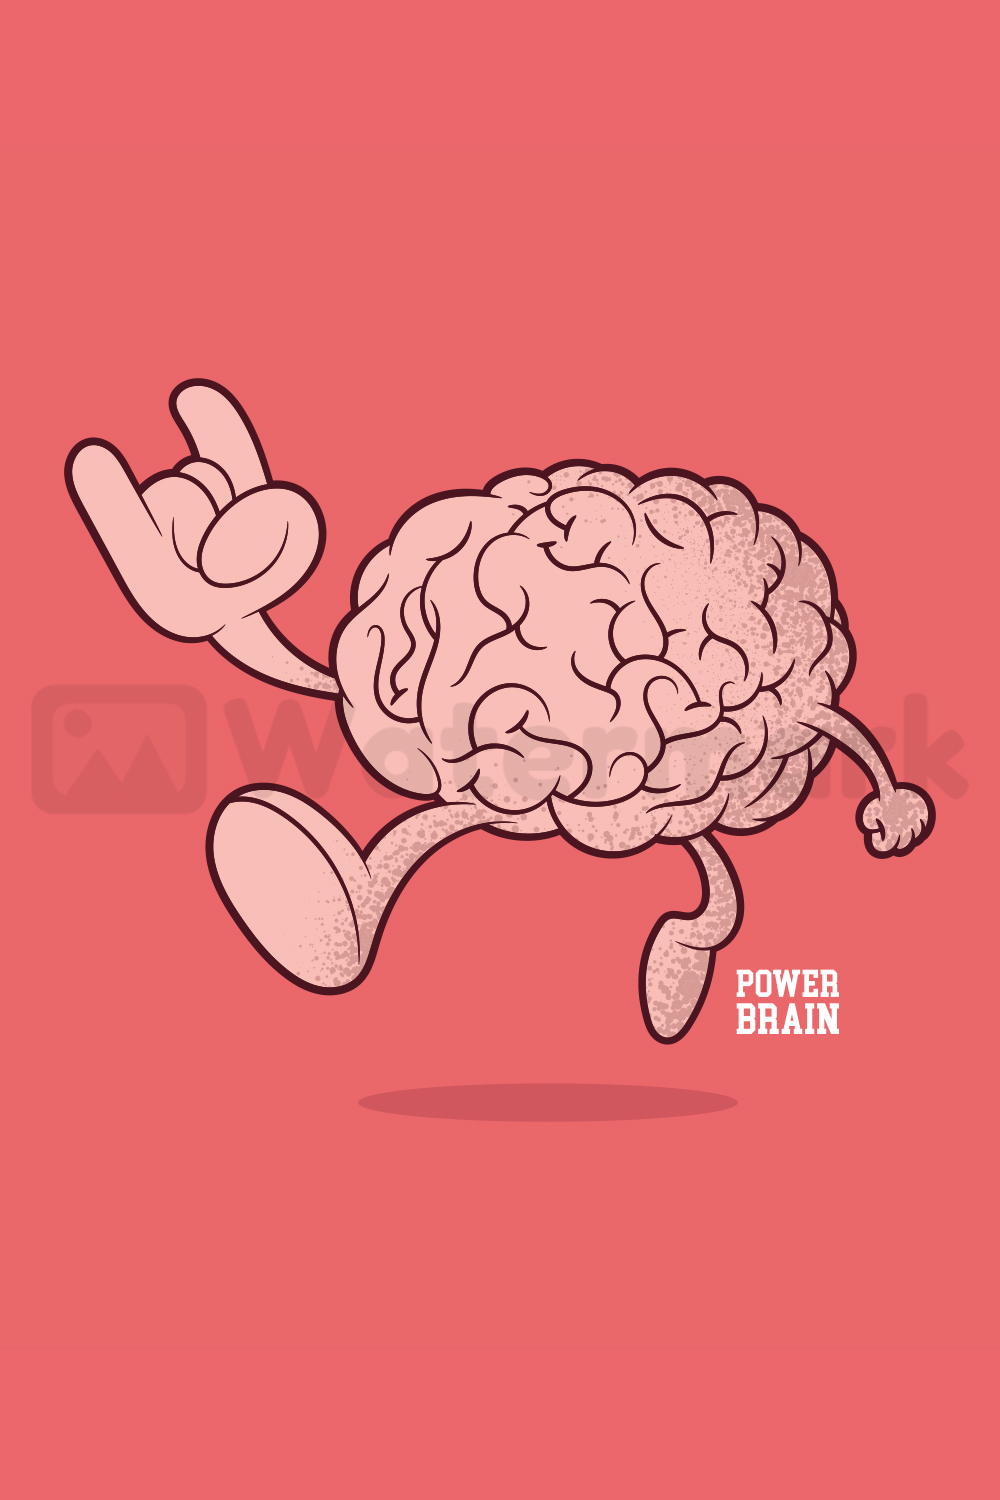 Power Brain Graphics Design pinterest image.